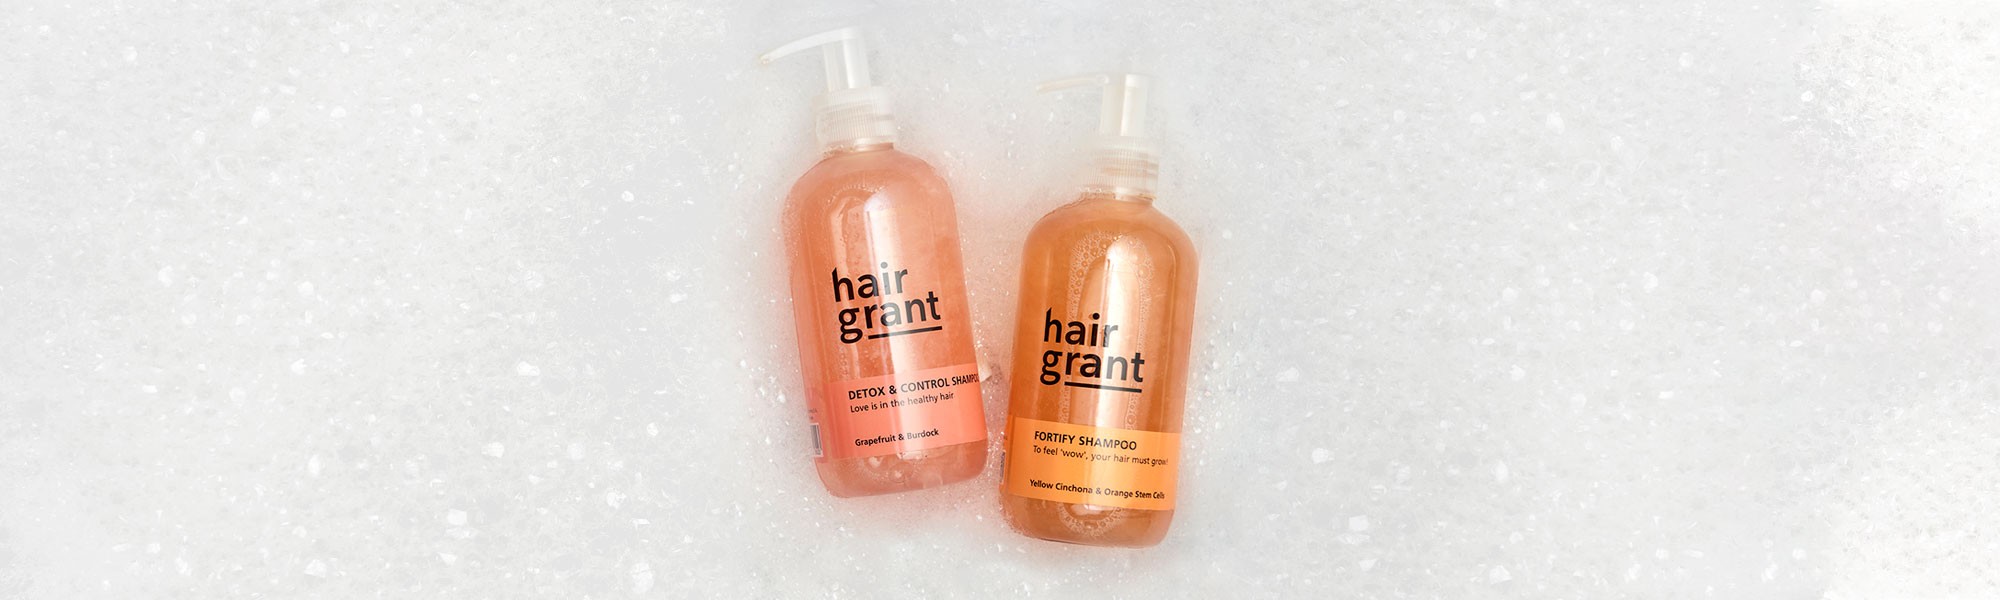 Natural shampoo for all hair types | hair grant